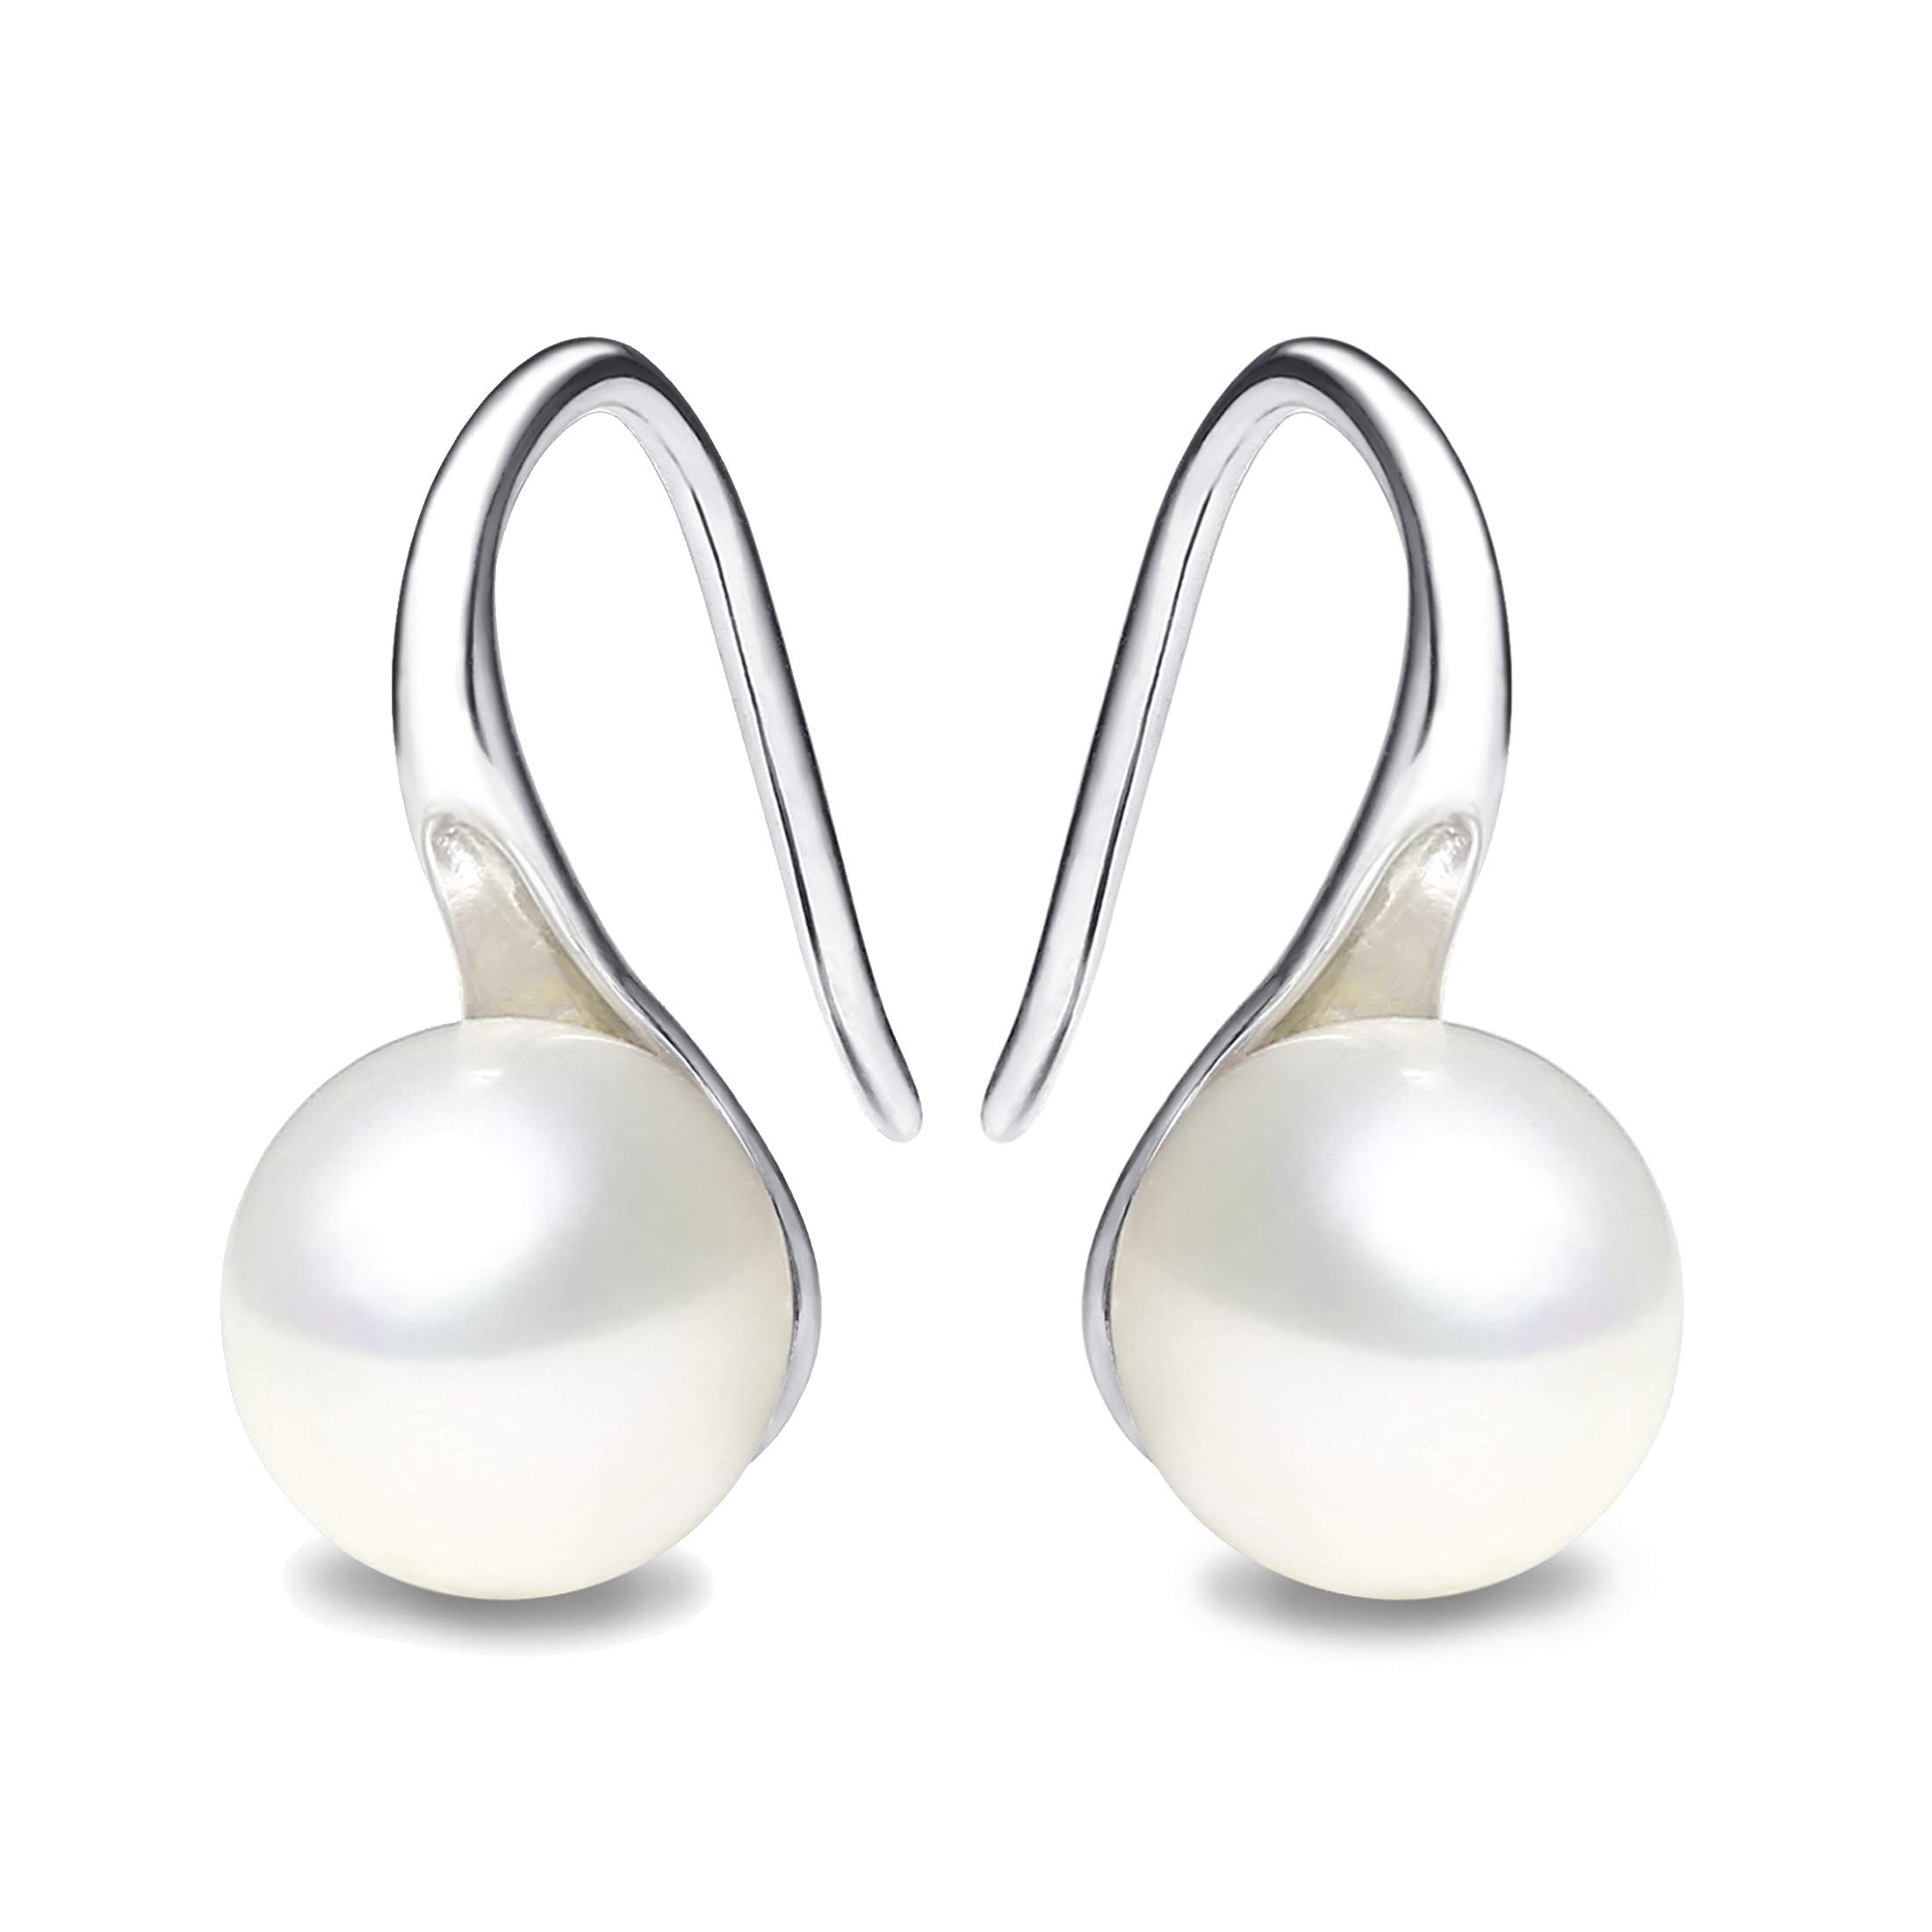 925 Sterling Silver Hoop Handpicked AAA+ Quality 7.5-8mm White Freshwater Cultured Pearl Dangle Drop Earrings Jewelry for Women Girls